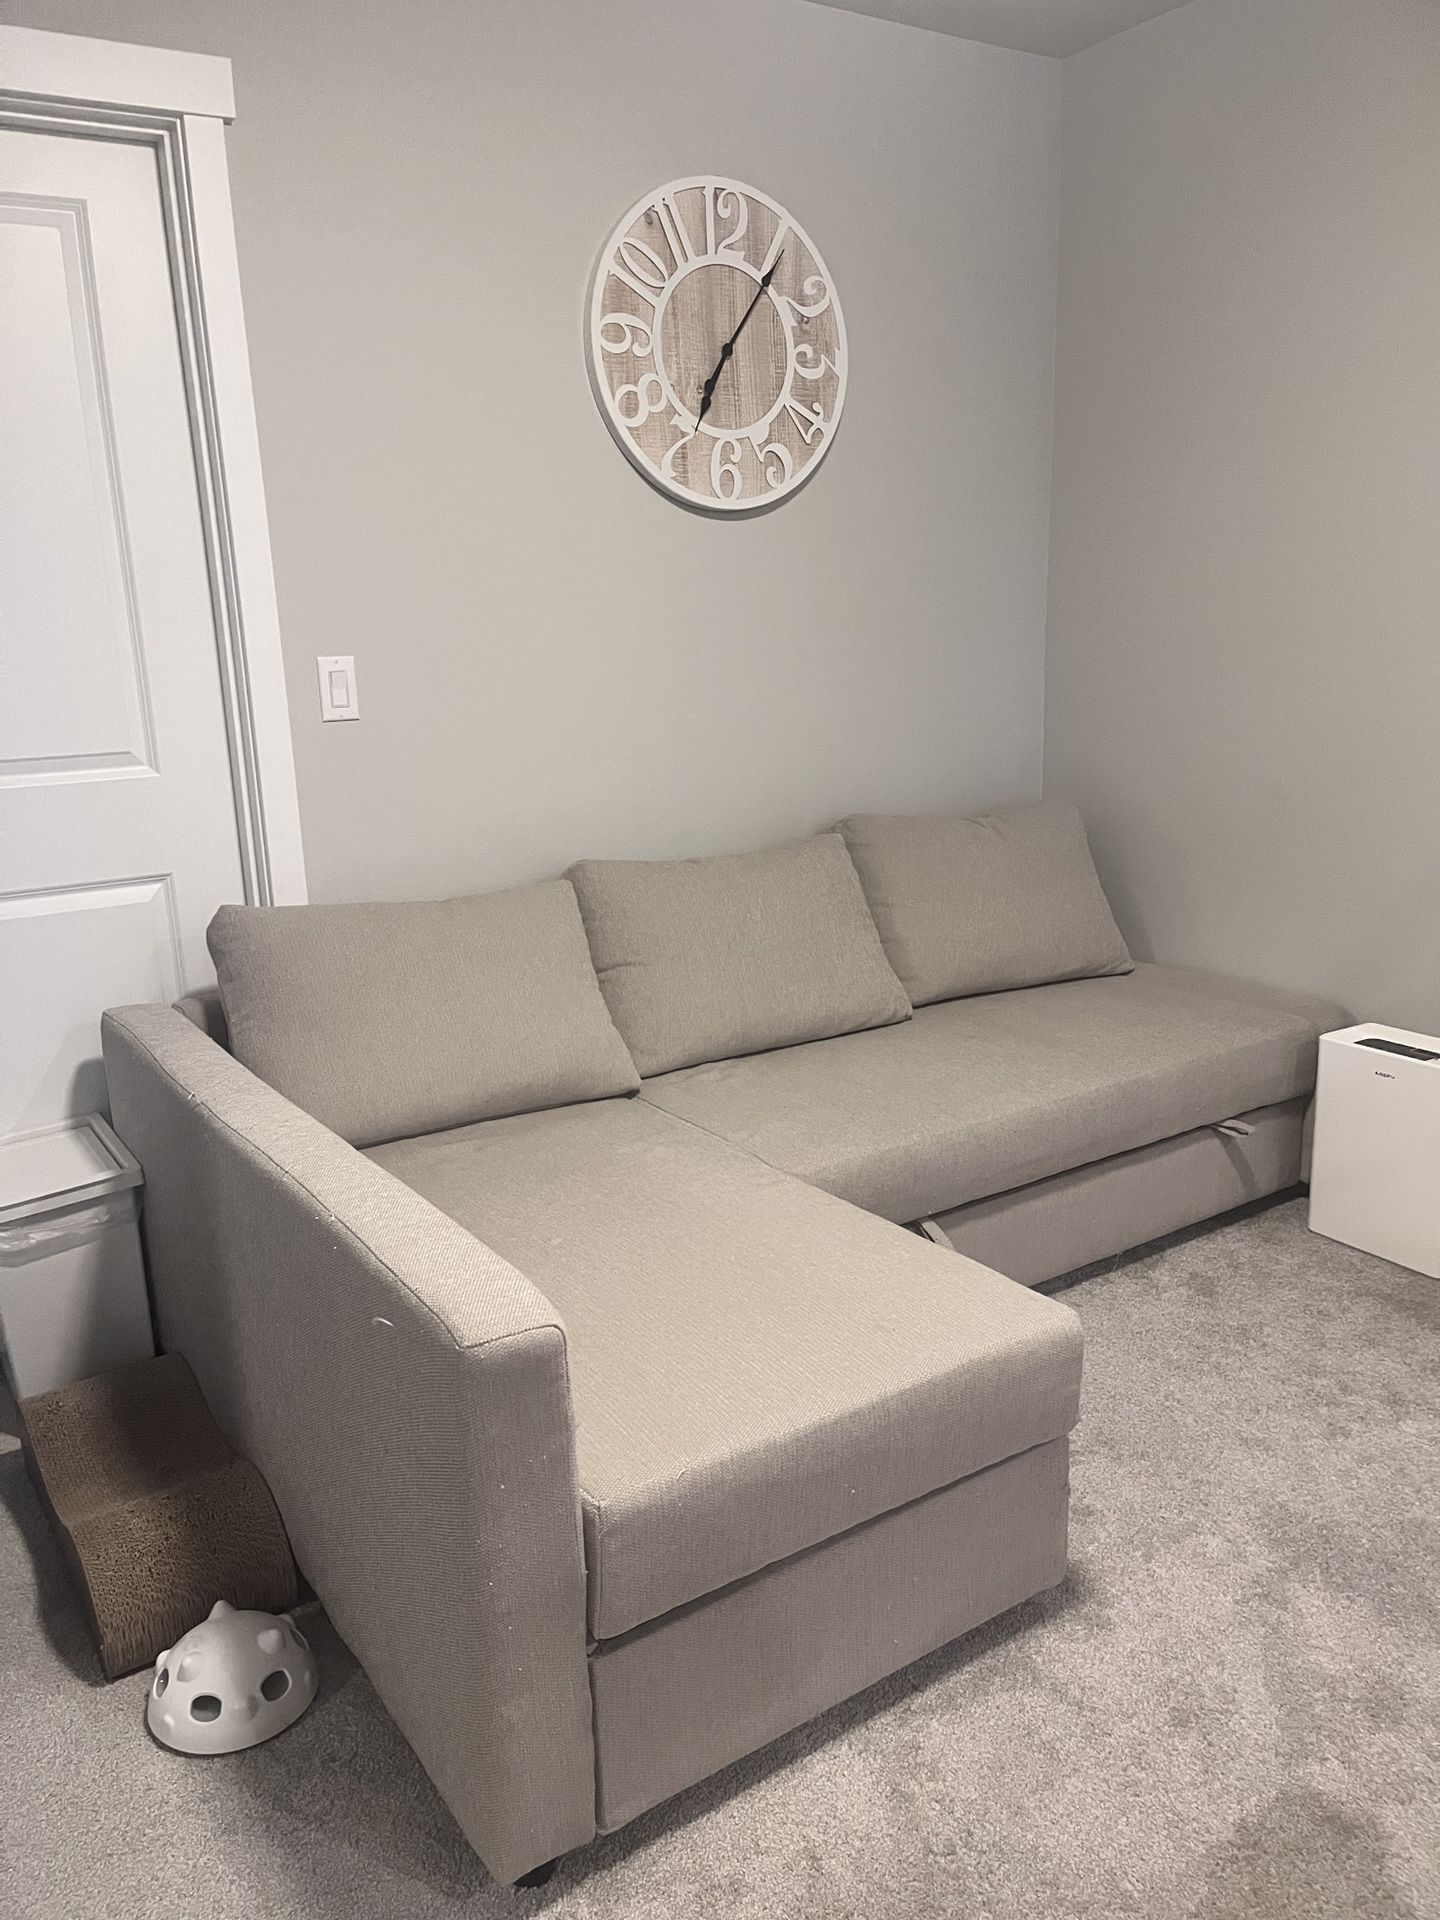 Sofa bed IKEA FRIHETEN Sleeper sectional,3 seat w/storage, Hyllie beige